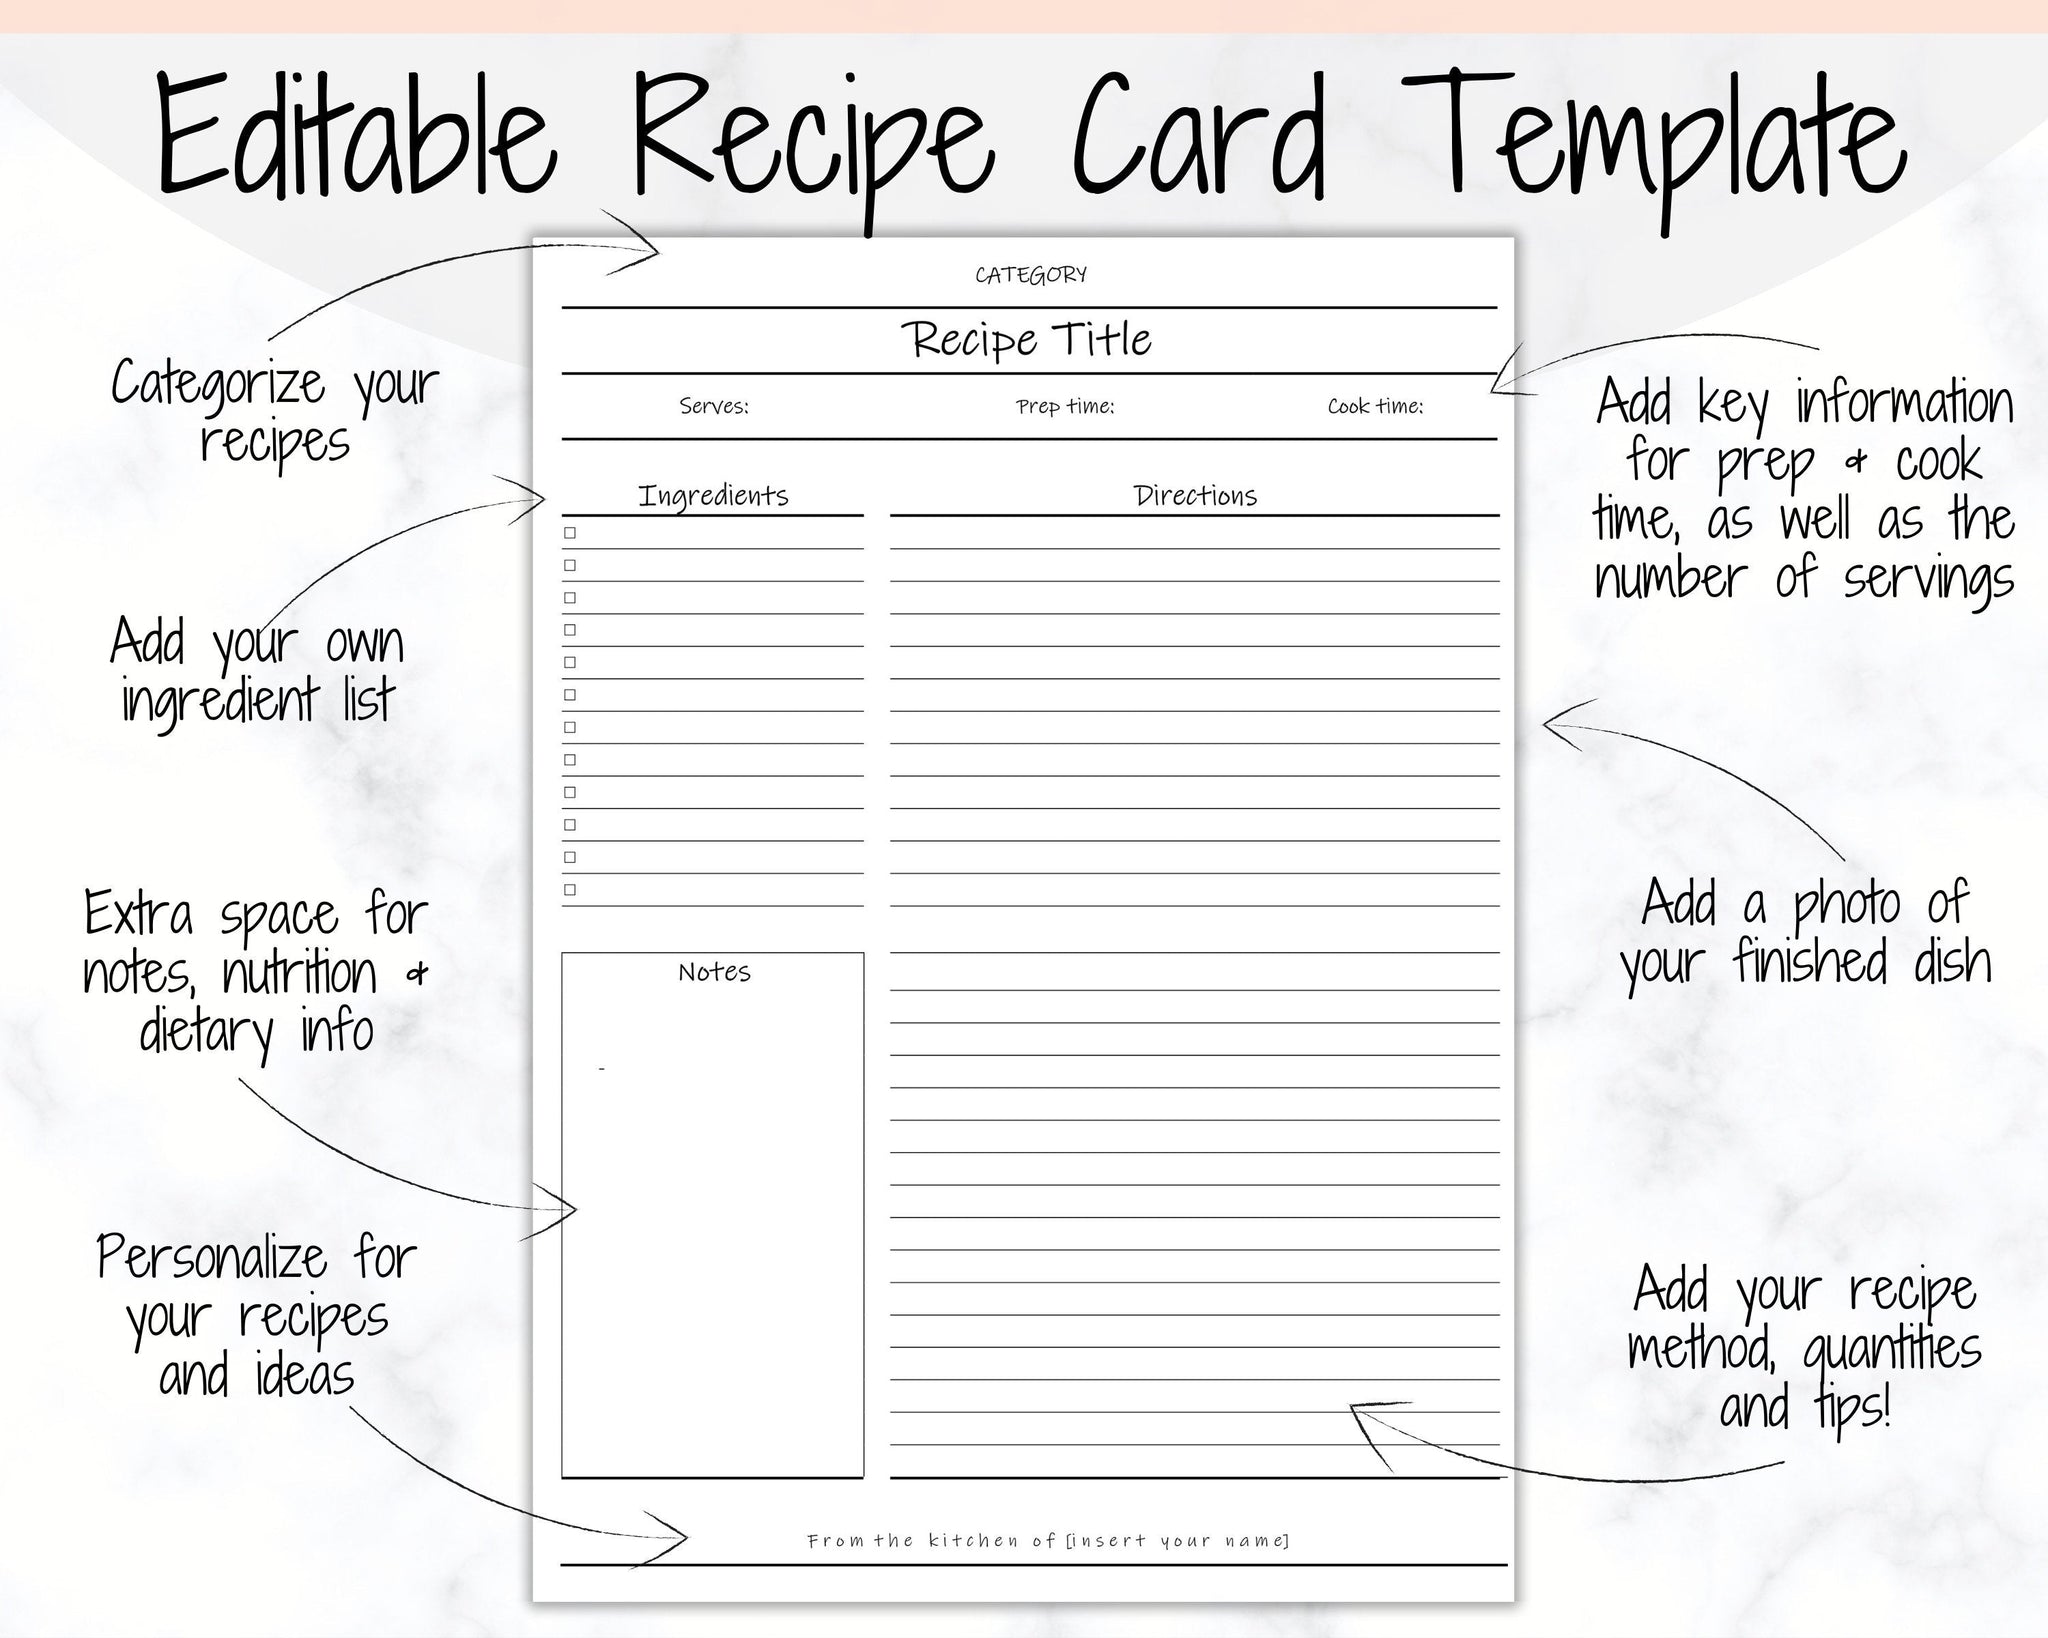 Recipe Book to Write in Your Own Recipes 8.5 x 11 Recipe Book